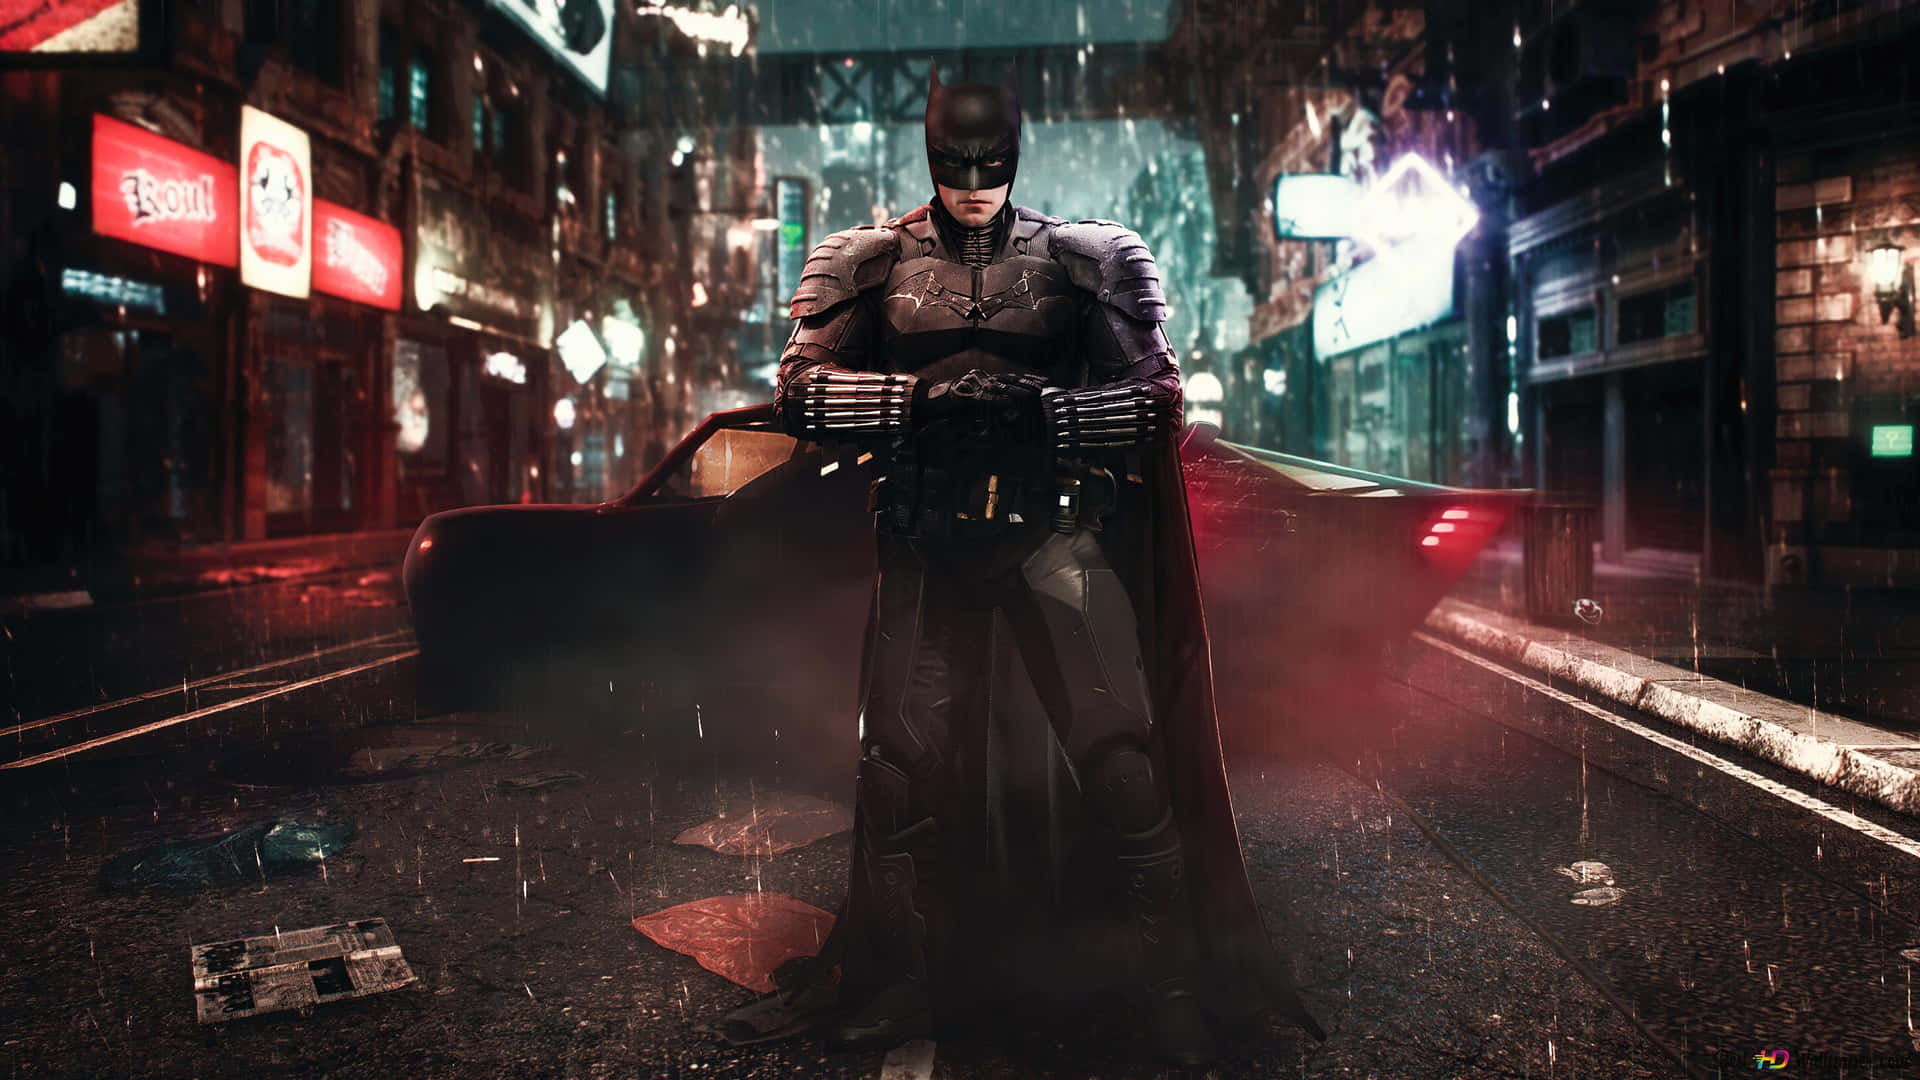 Discover the urban landscape of Batman City - home of the Dark Knight. Wallpaper